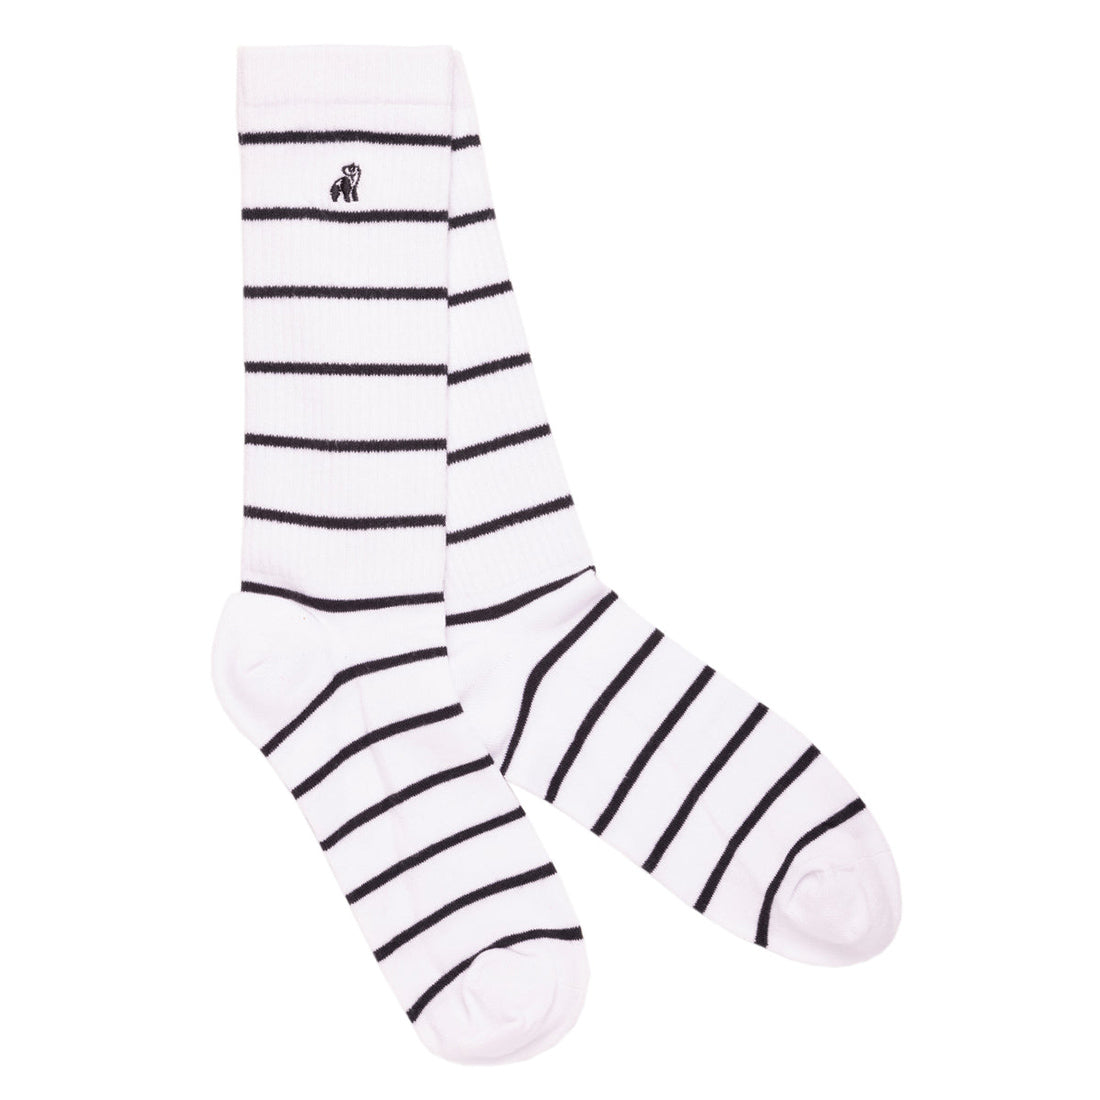 socks-white-navy-striped-bamboo-socks-1_f409818c-82a4-4d55-a605-fed6e7bfe788.jpg